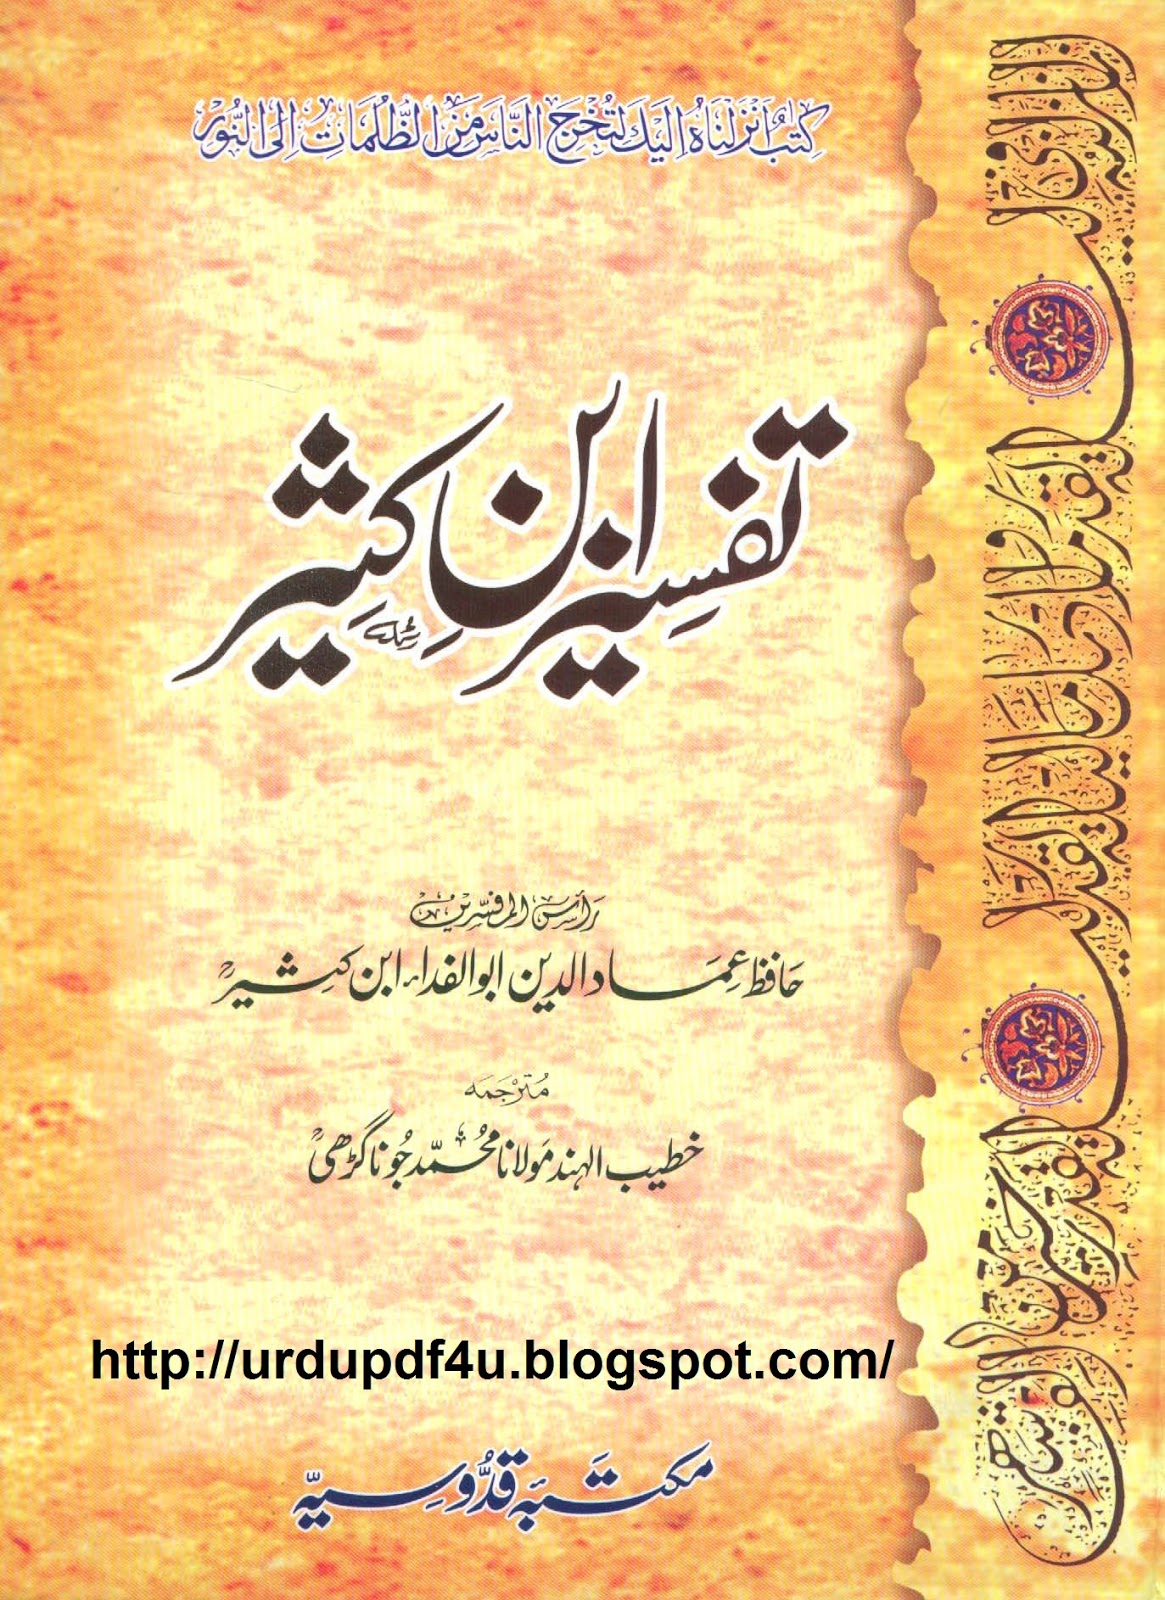 download at tabari tafsir pdf software